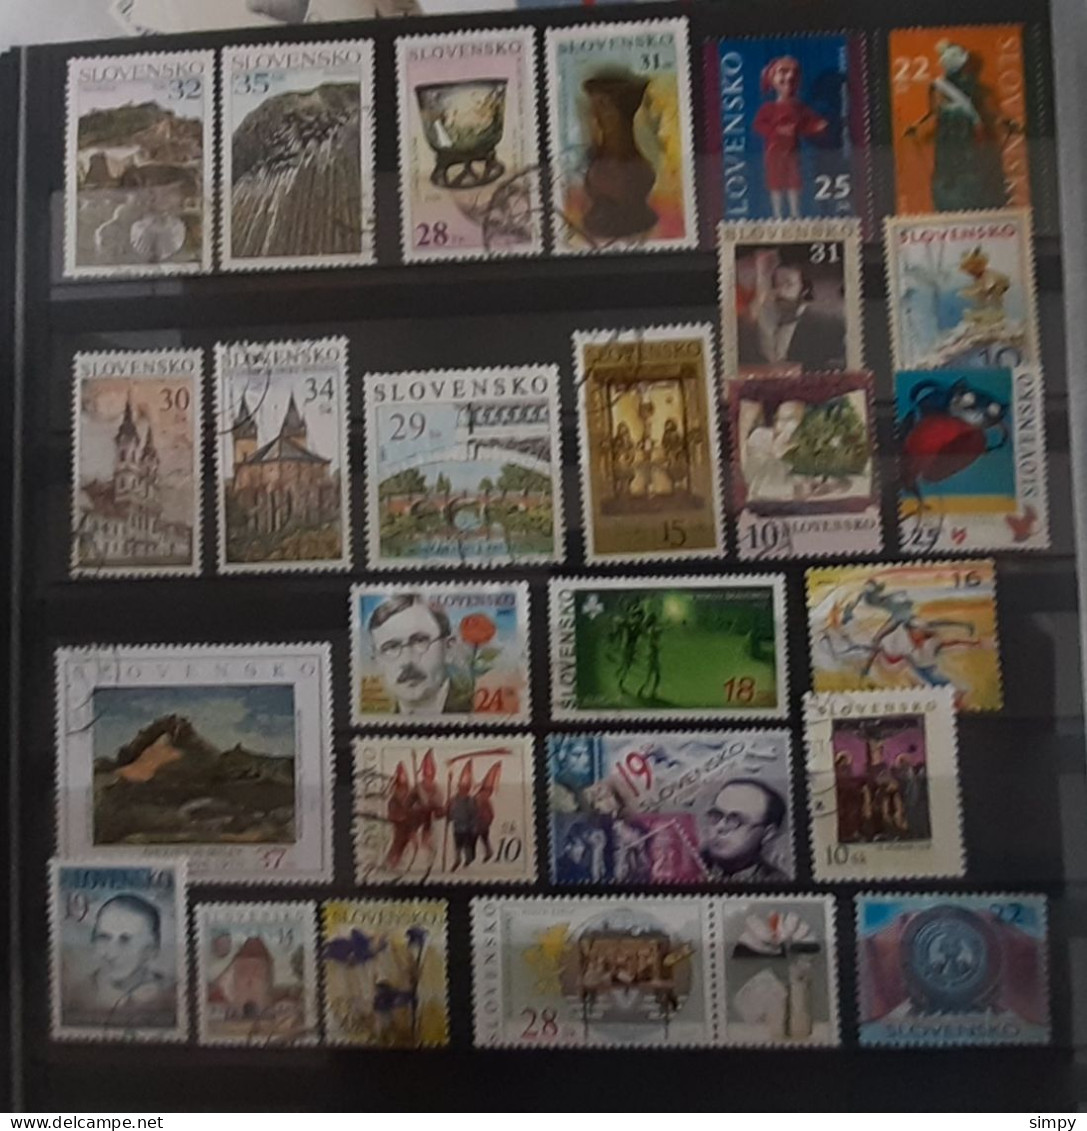 SLOVAKIA 2007 Lot Of Used Stamps - Usati